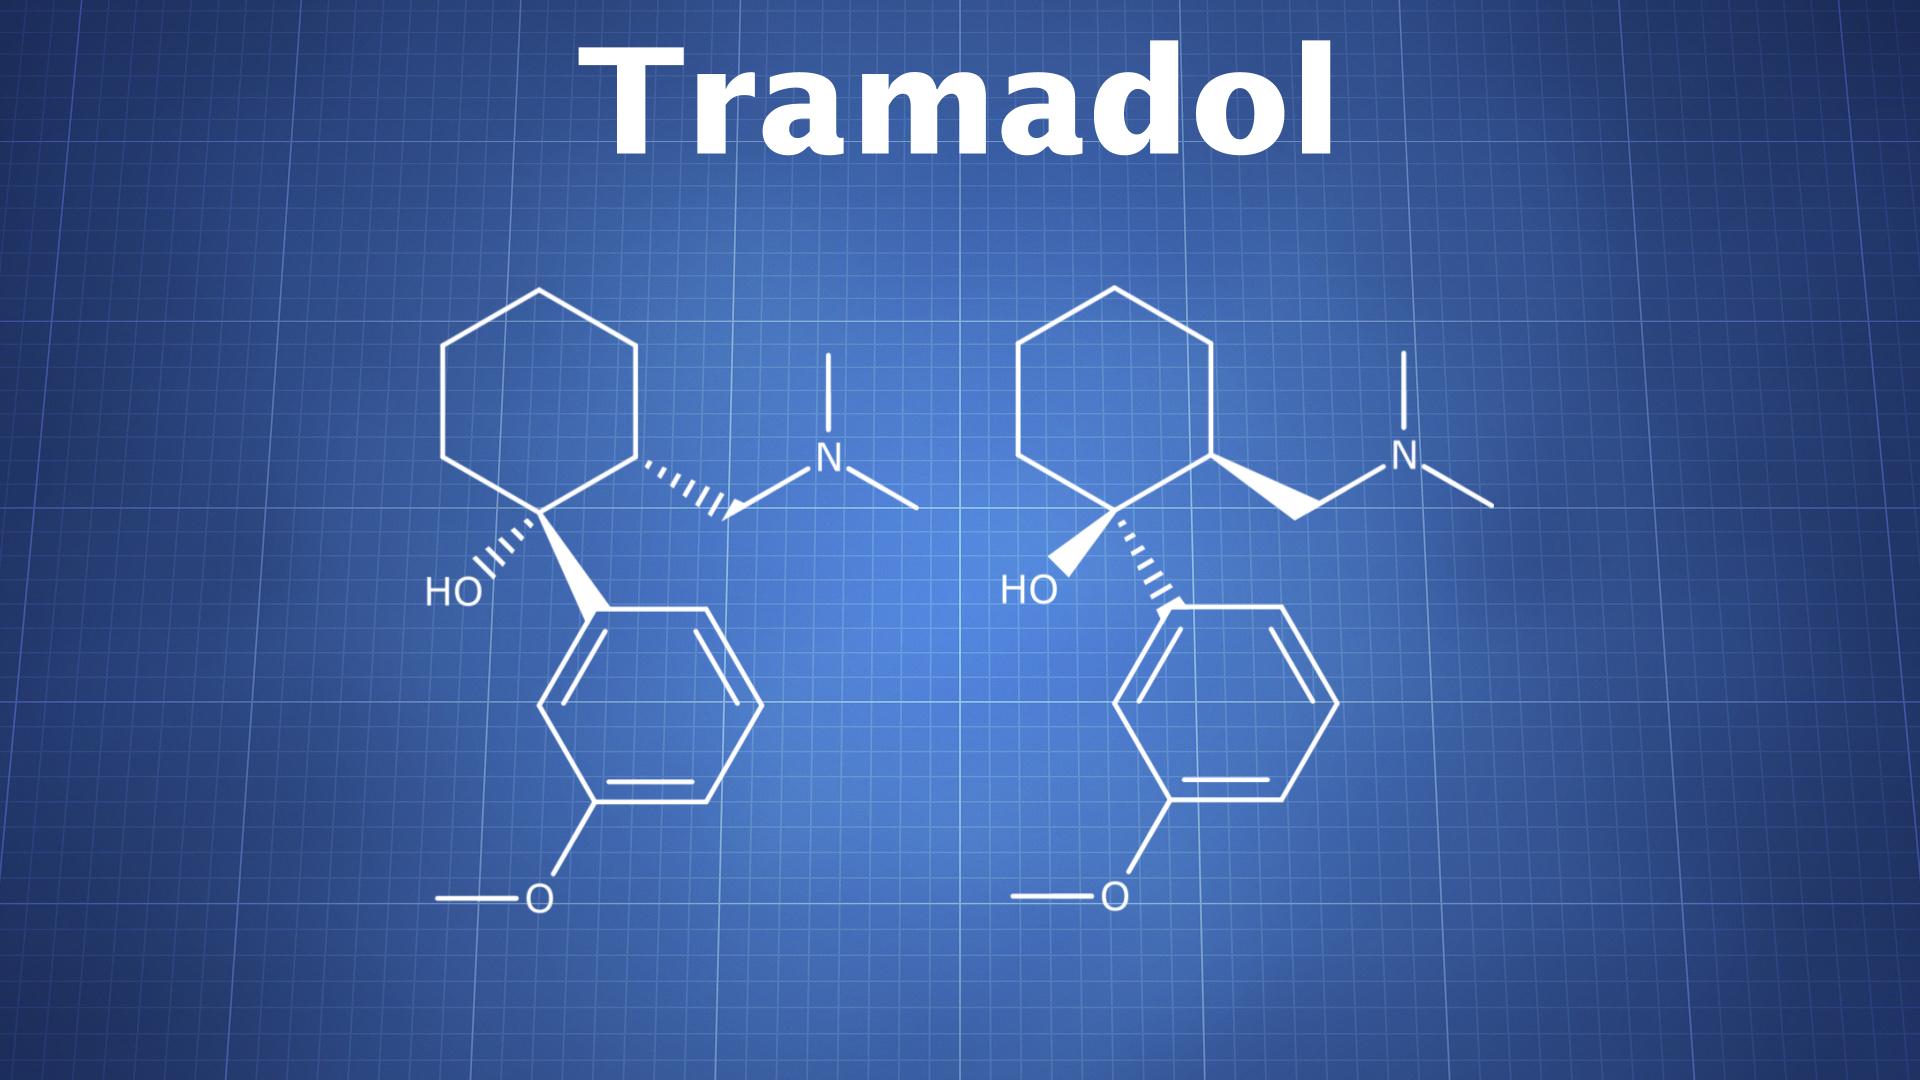 Alternating oxycodone and tramadol